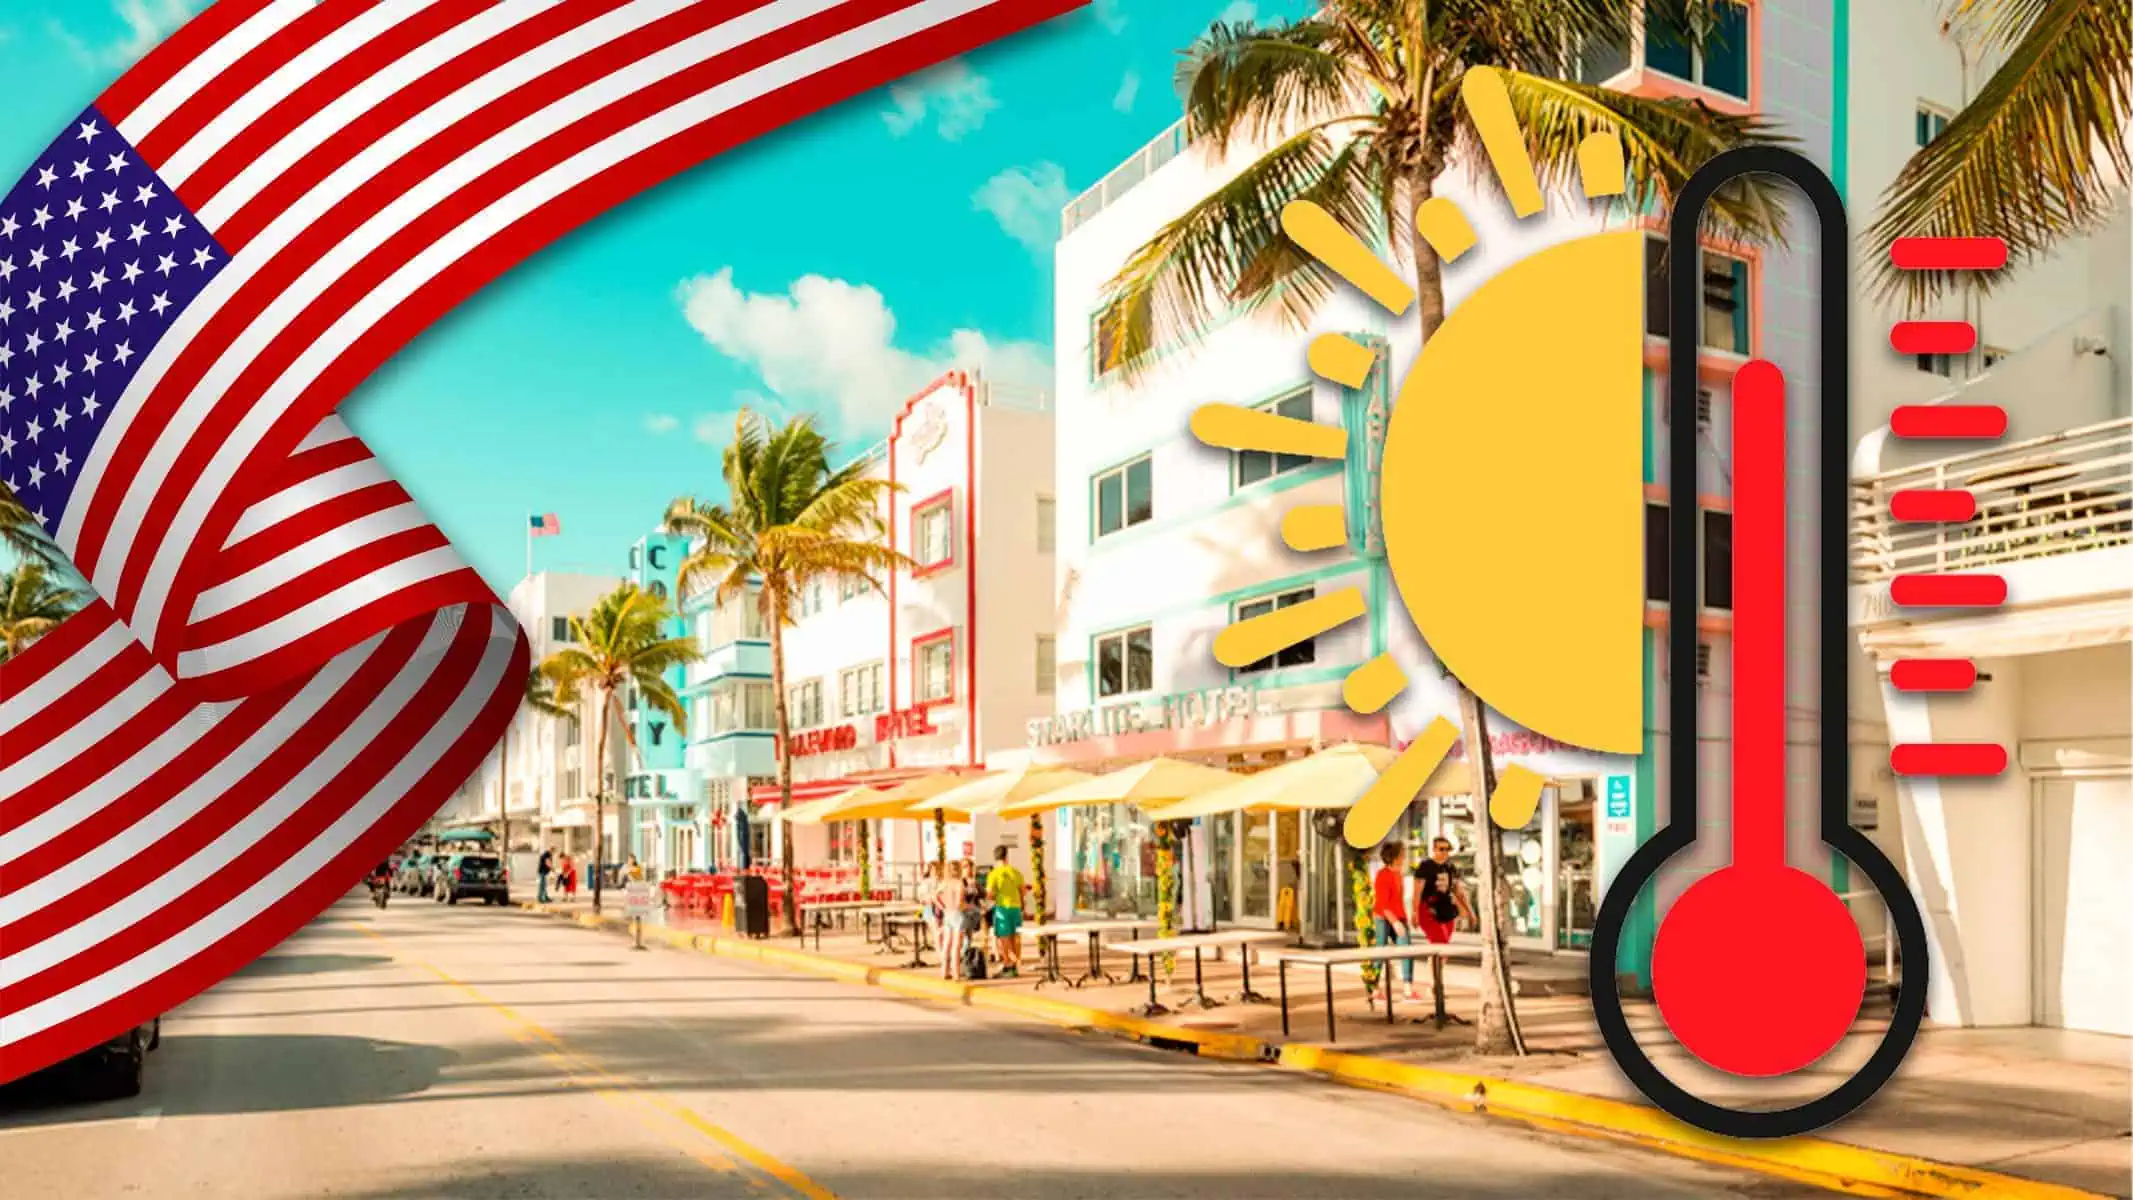 Miami Experiences Heat Wave Heat Index May Reach 107 Degrees